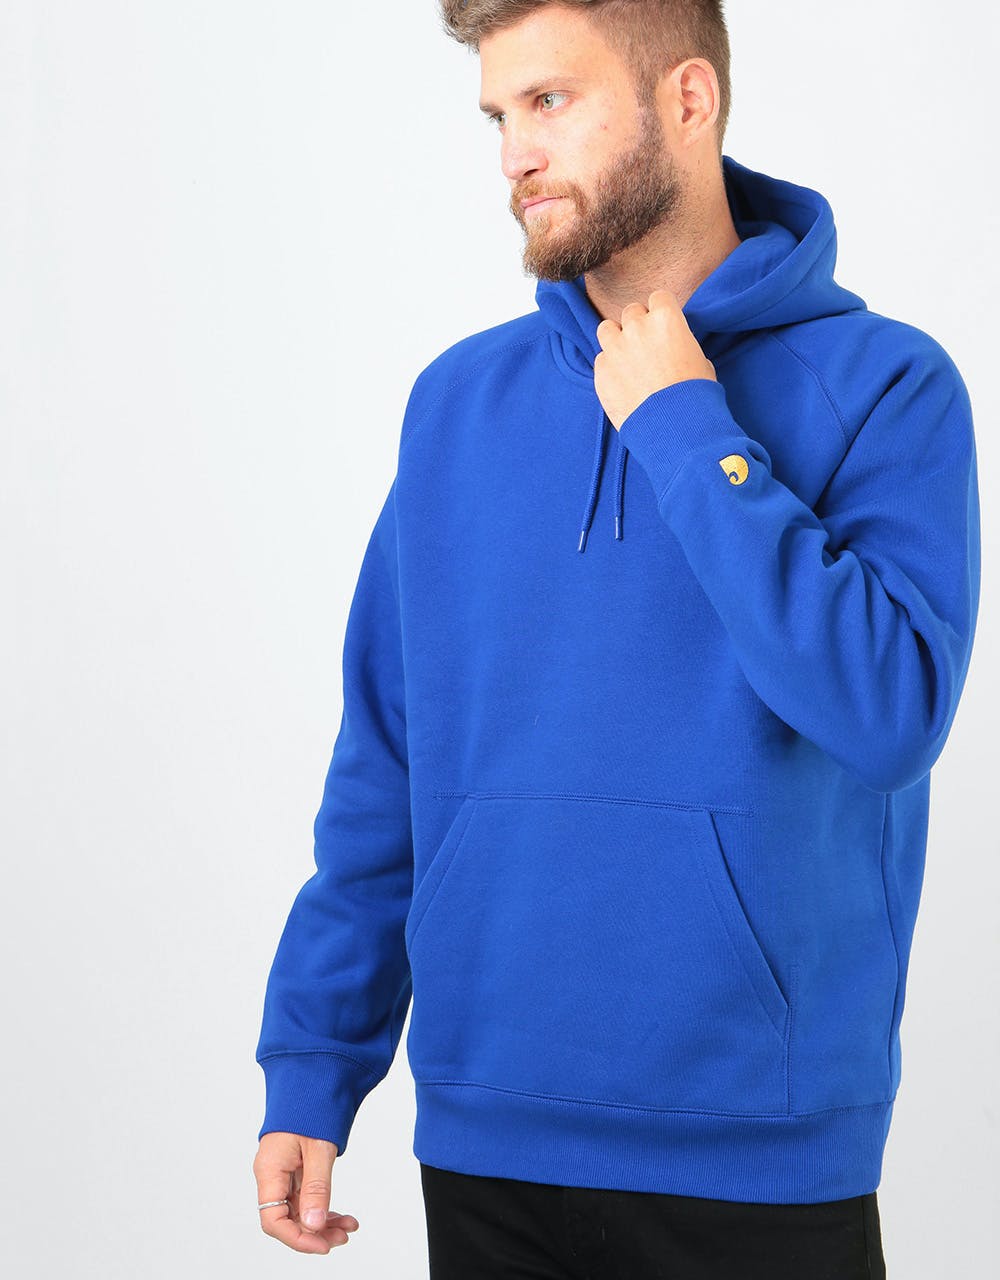 Carhartt WIP Hooded Chase Sweatshirt - Thunder Blue/Gold